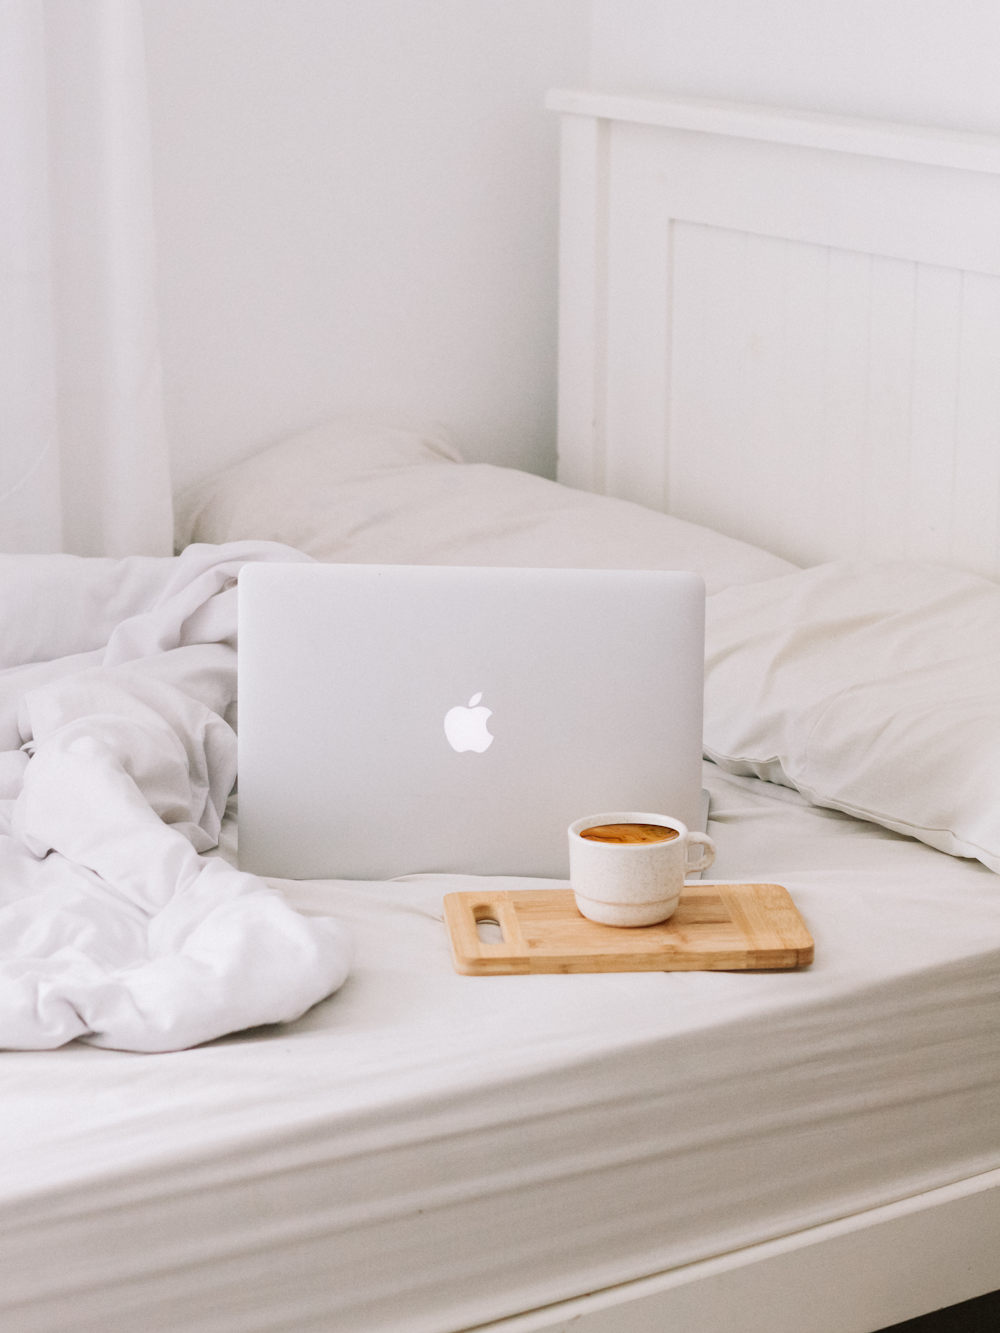 MacBook junto a una taza de té con café con leche